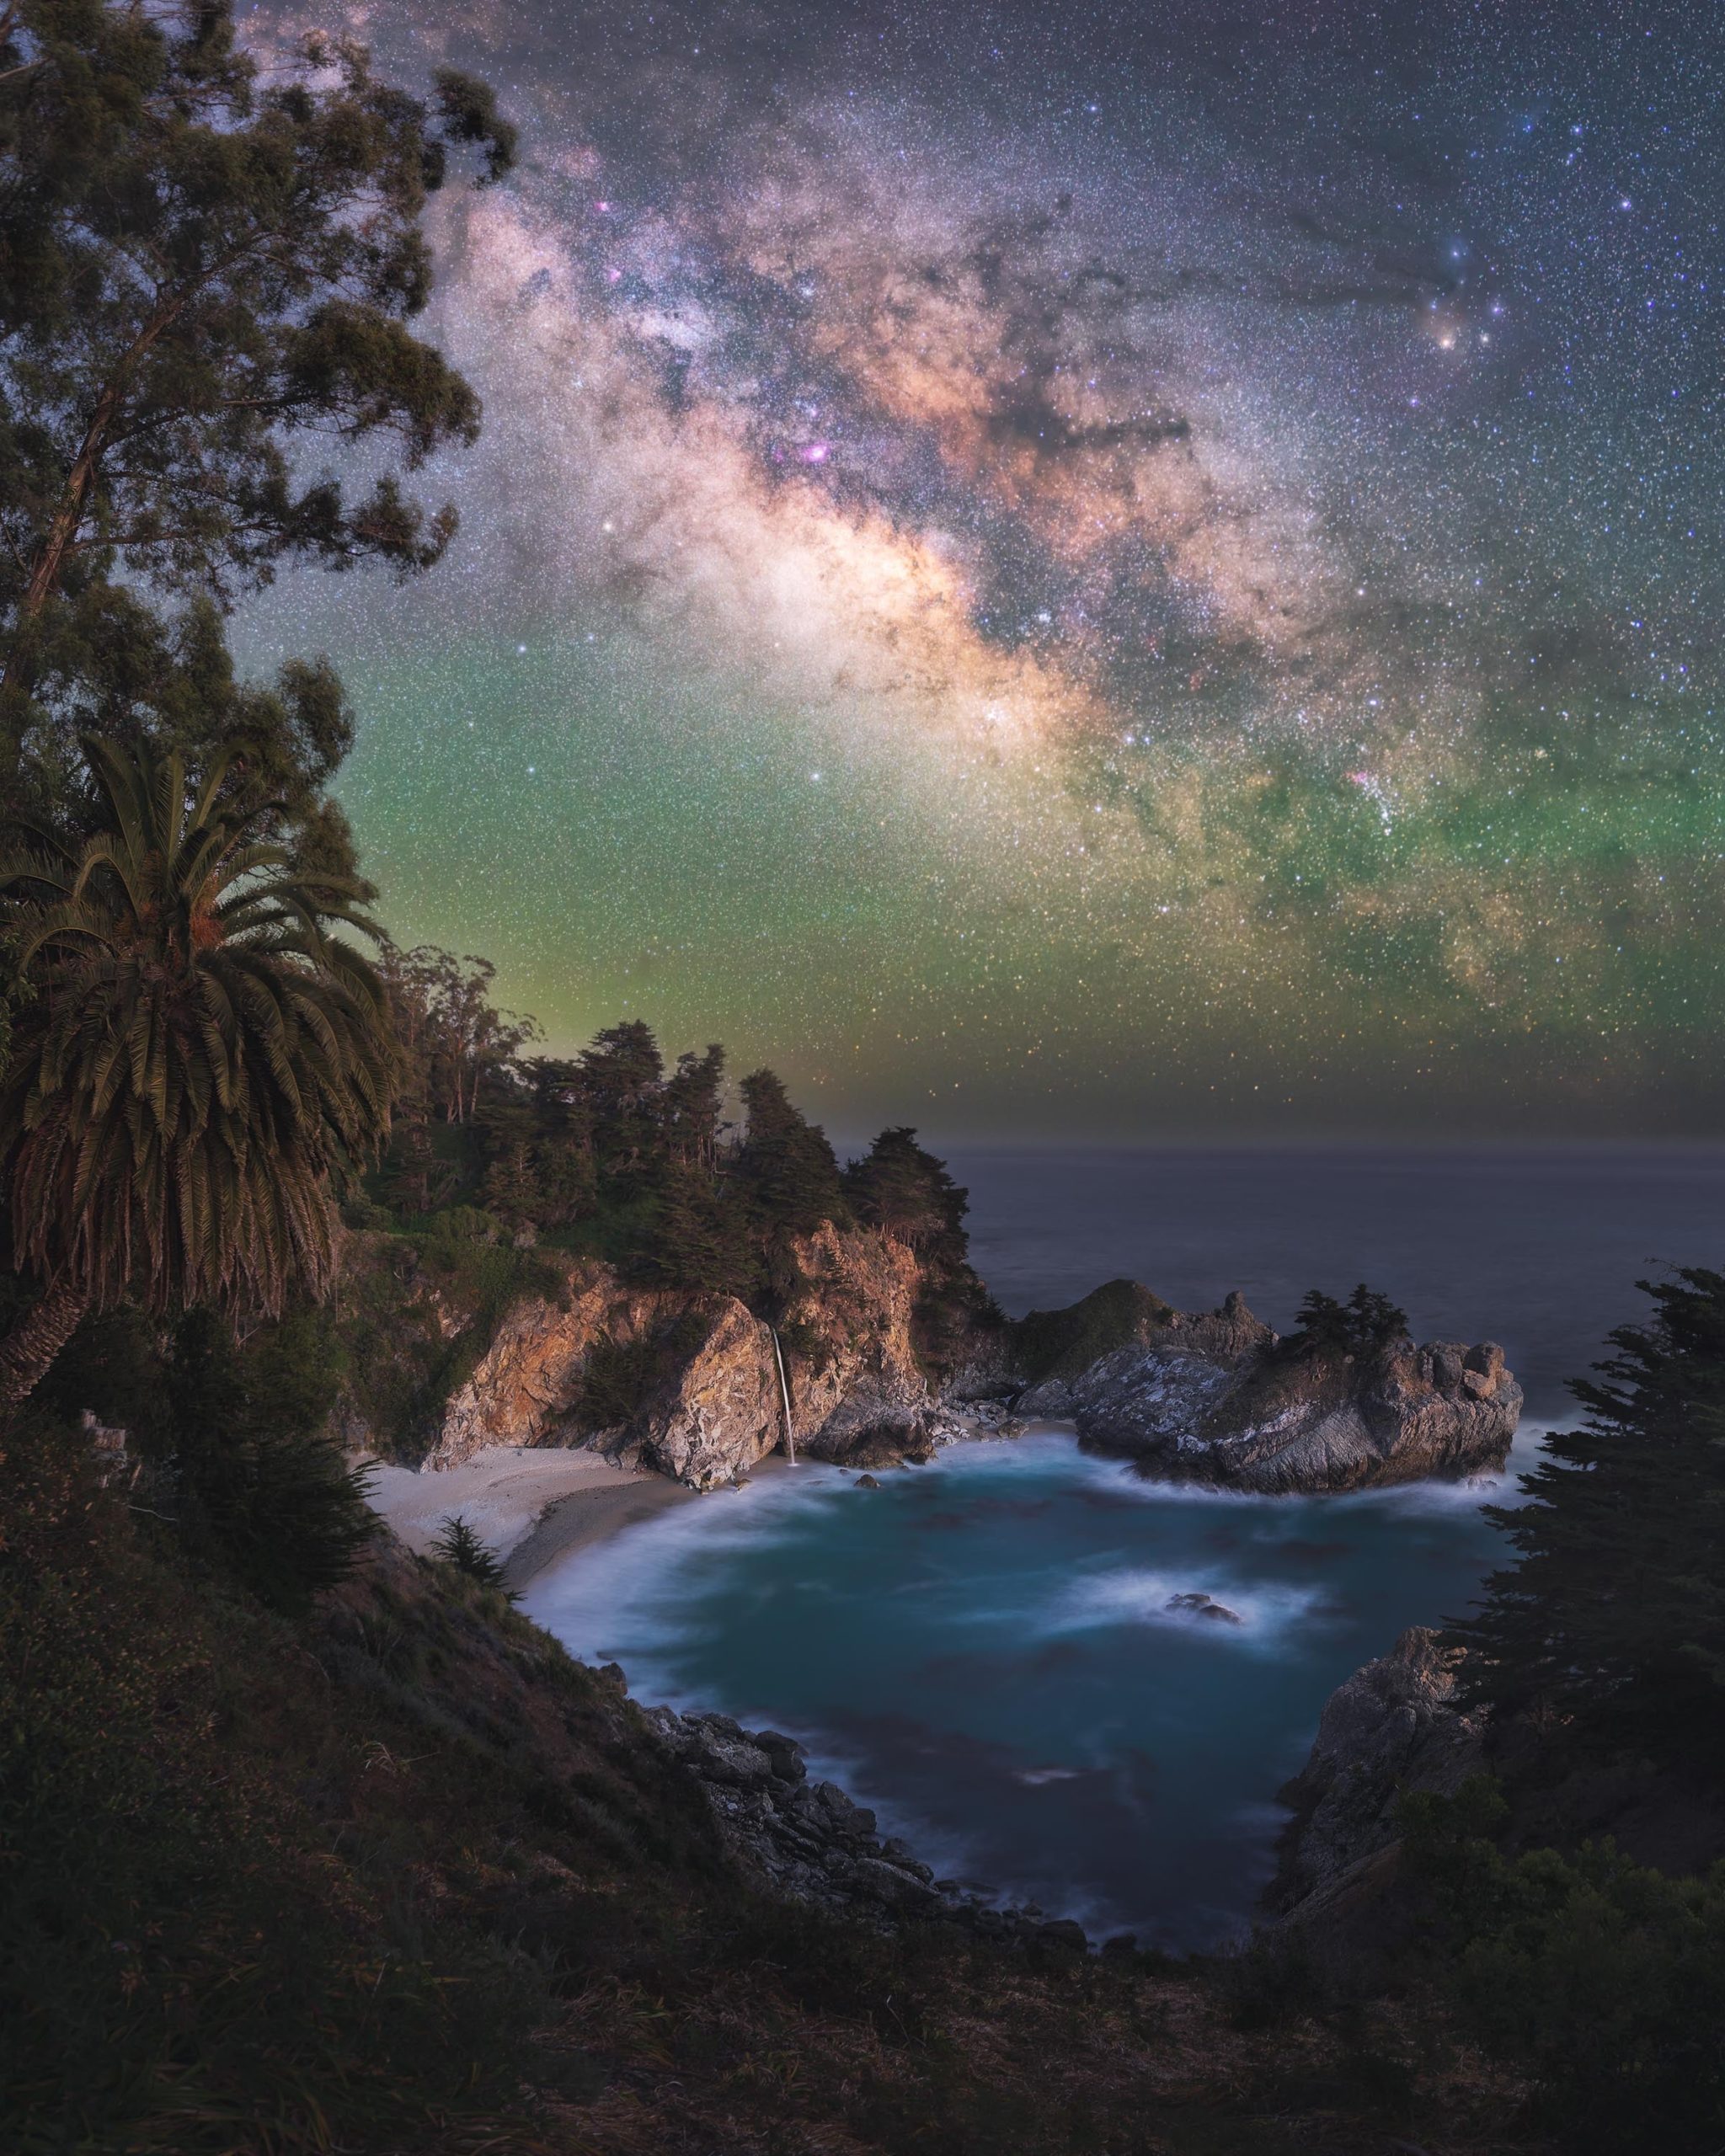 The 15 Best Milky Way Photos of 2021